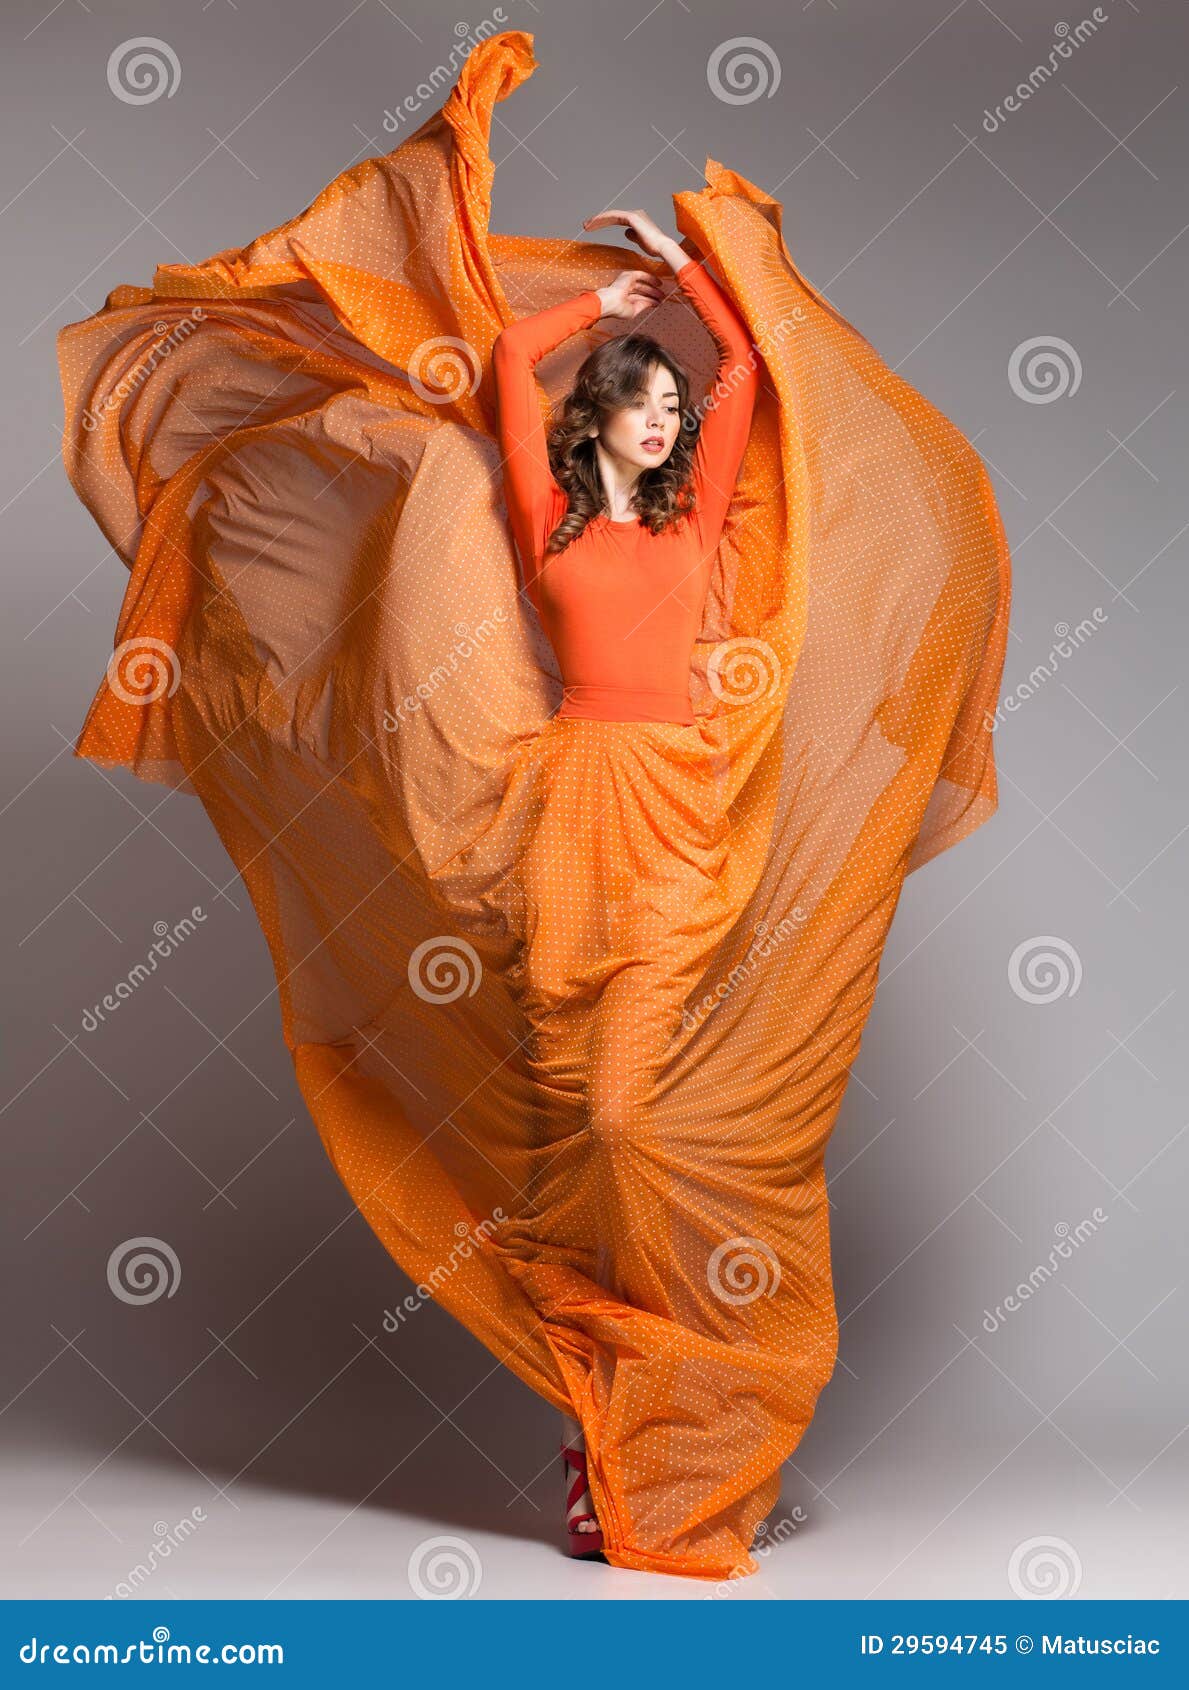 beautiful woman in long orange dress posing dramatic